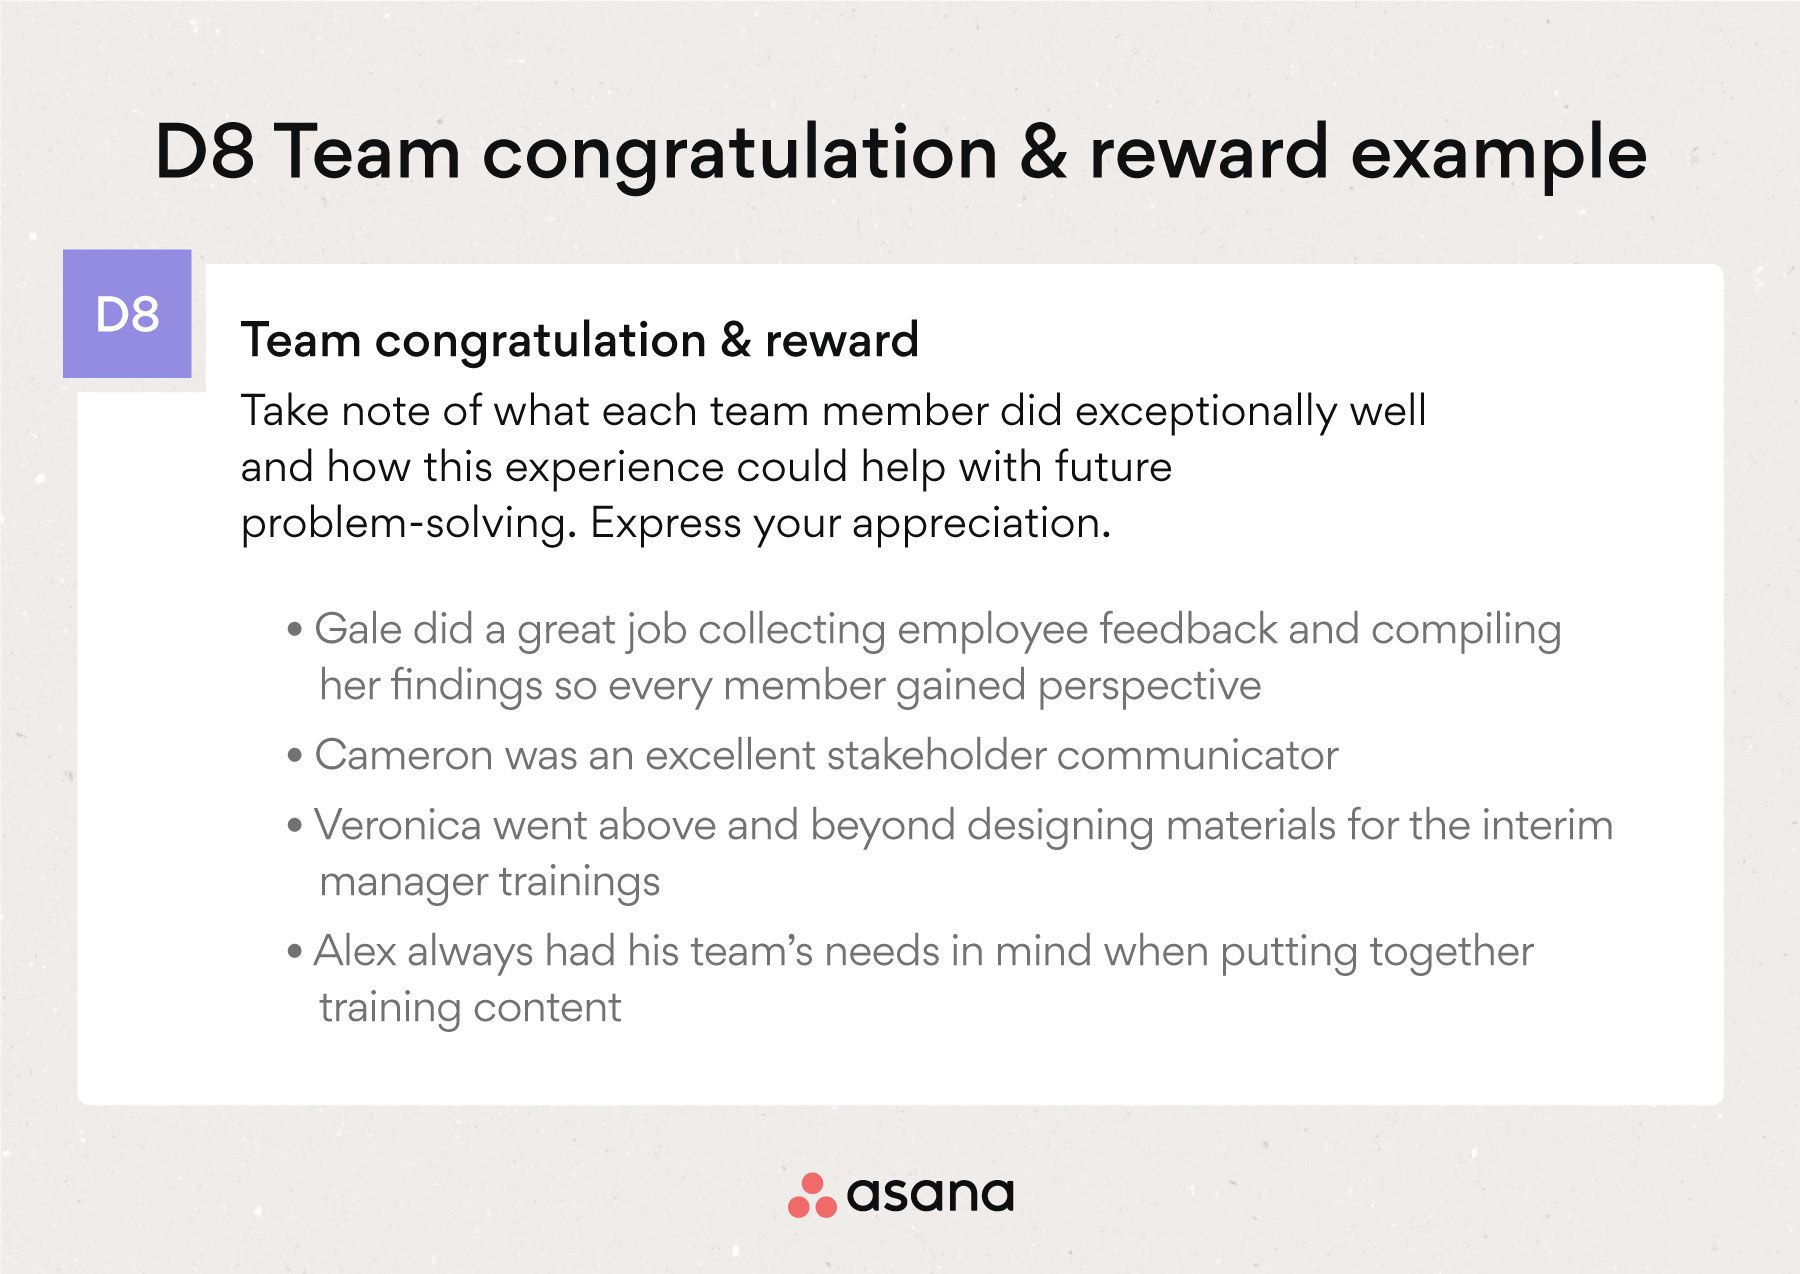 [inline illustration] 8D Team congratulations & reward (example)